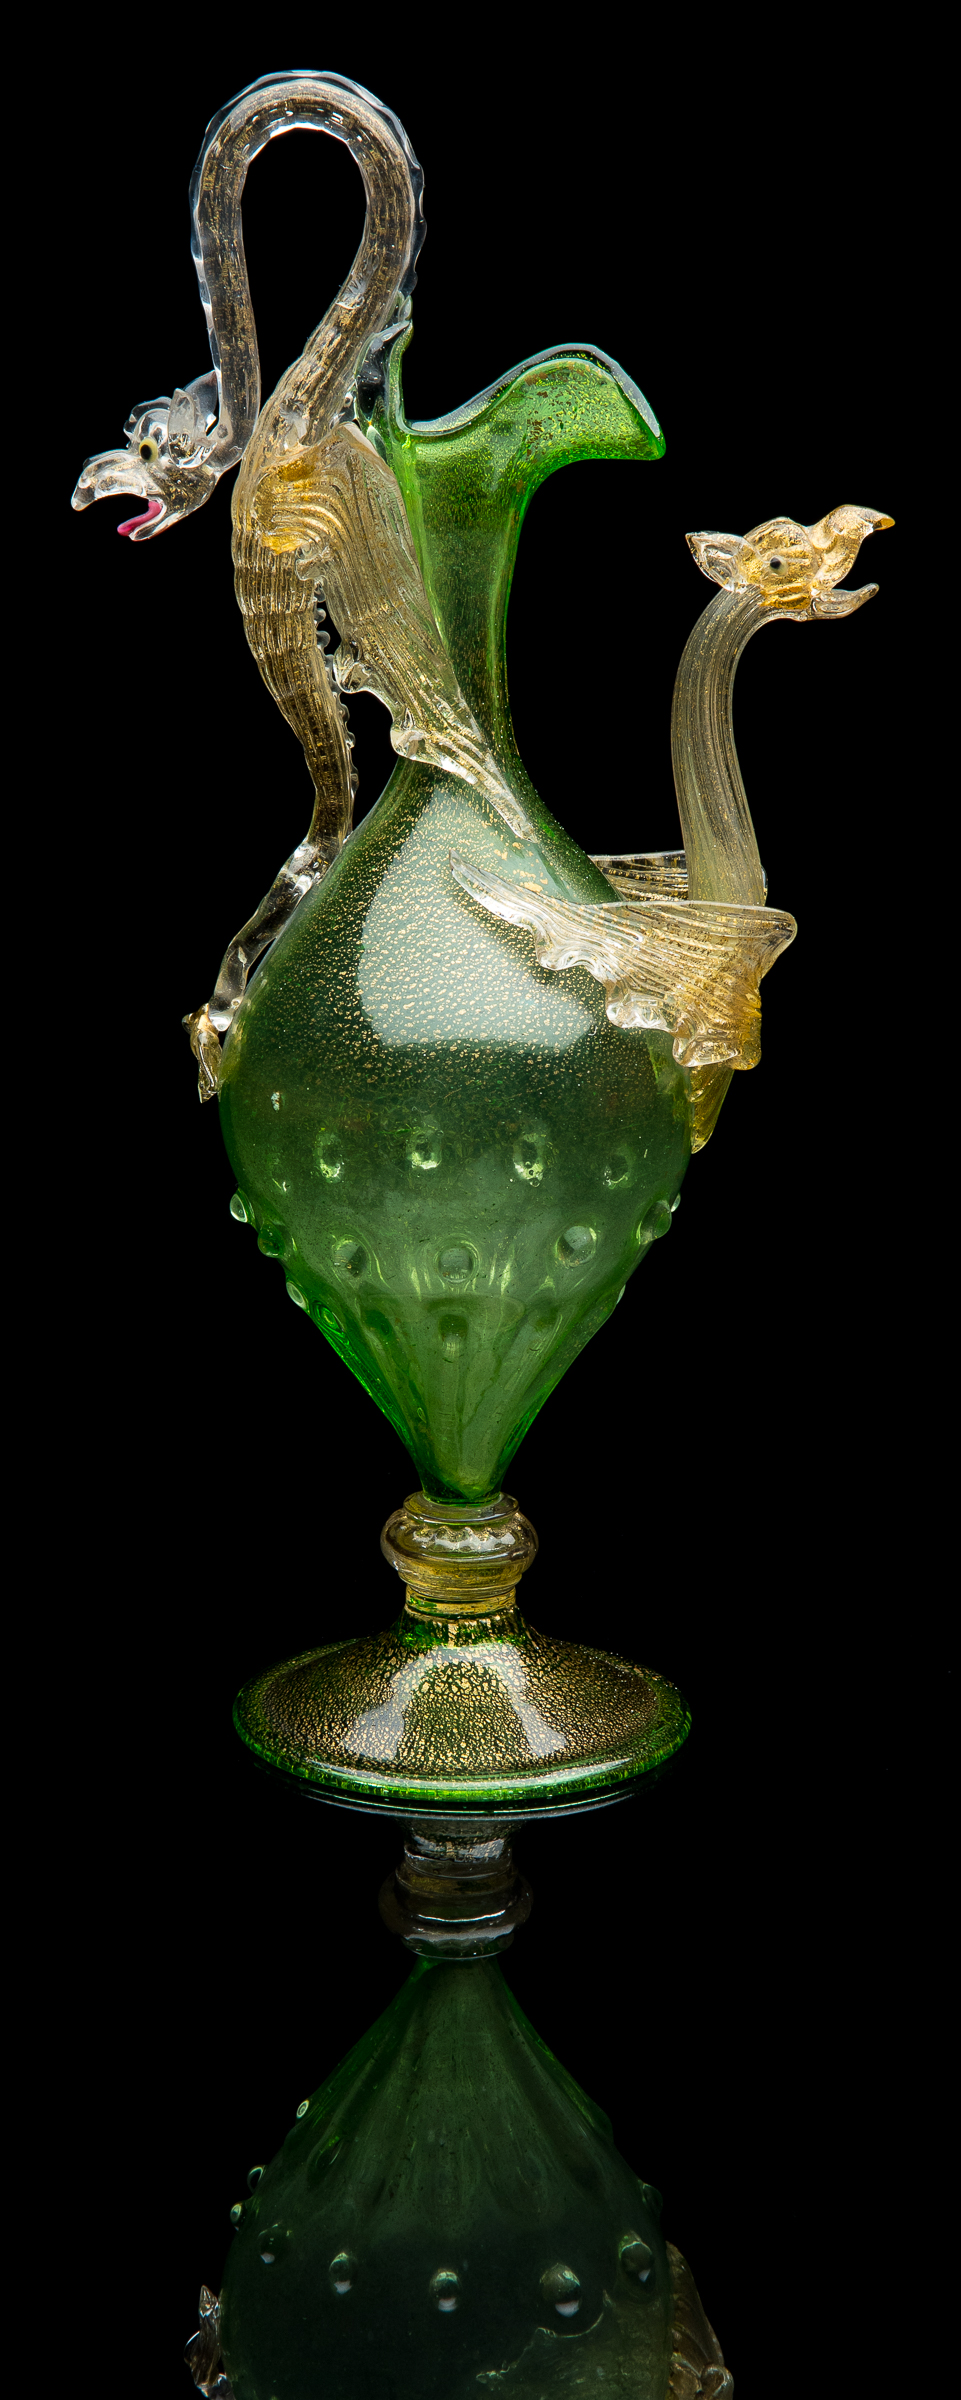  Salviati and Company,  Double Dragon Vase  (1880, glass, 12 inches), VV.927 